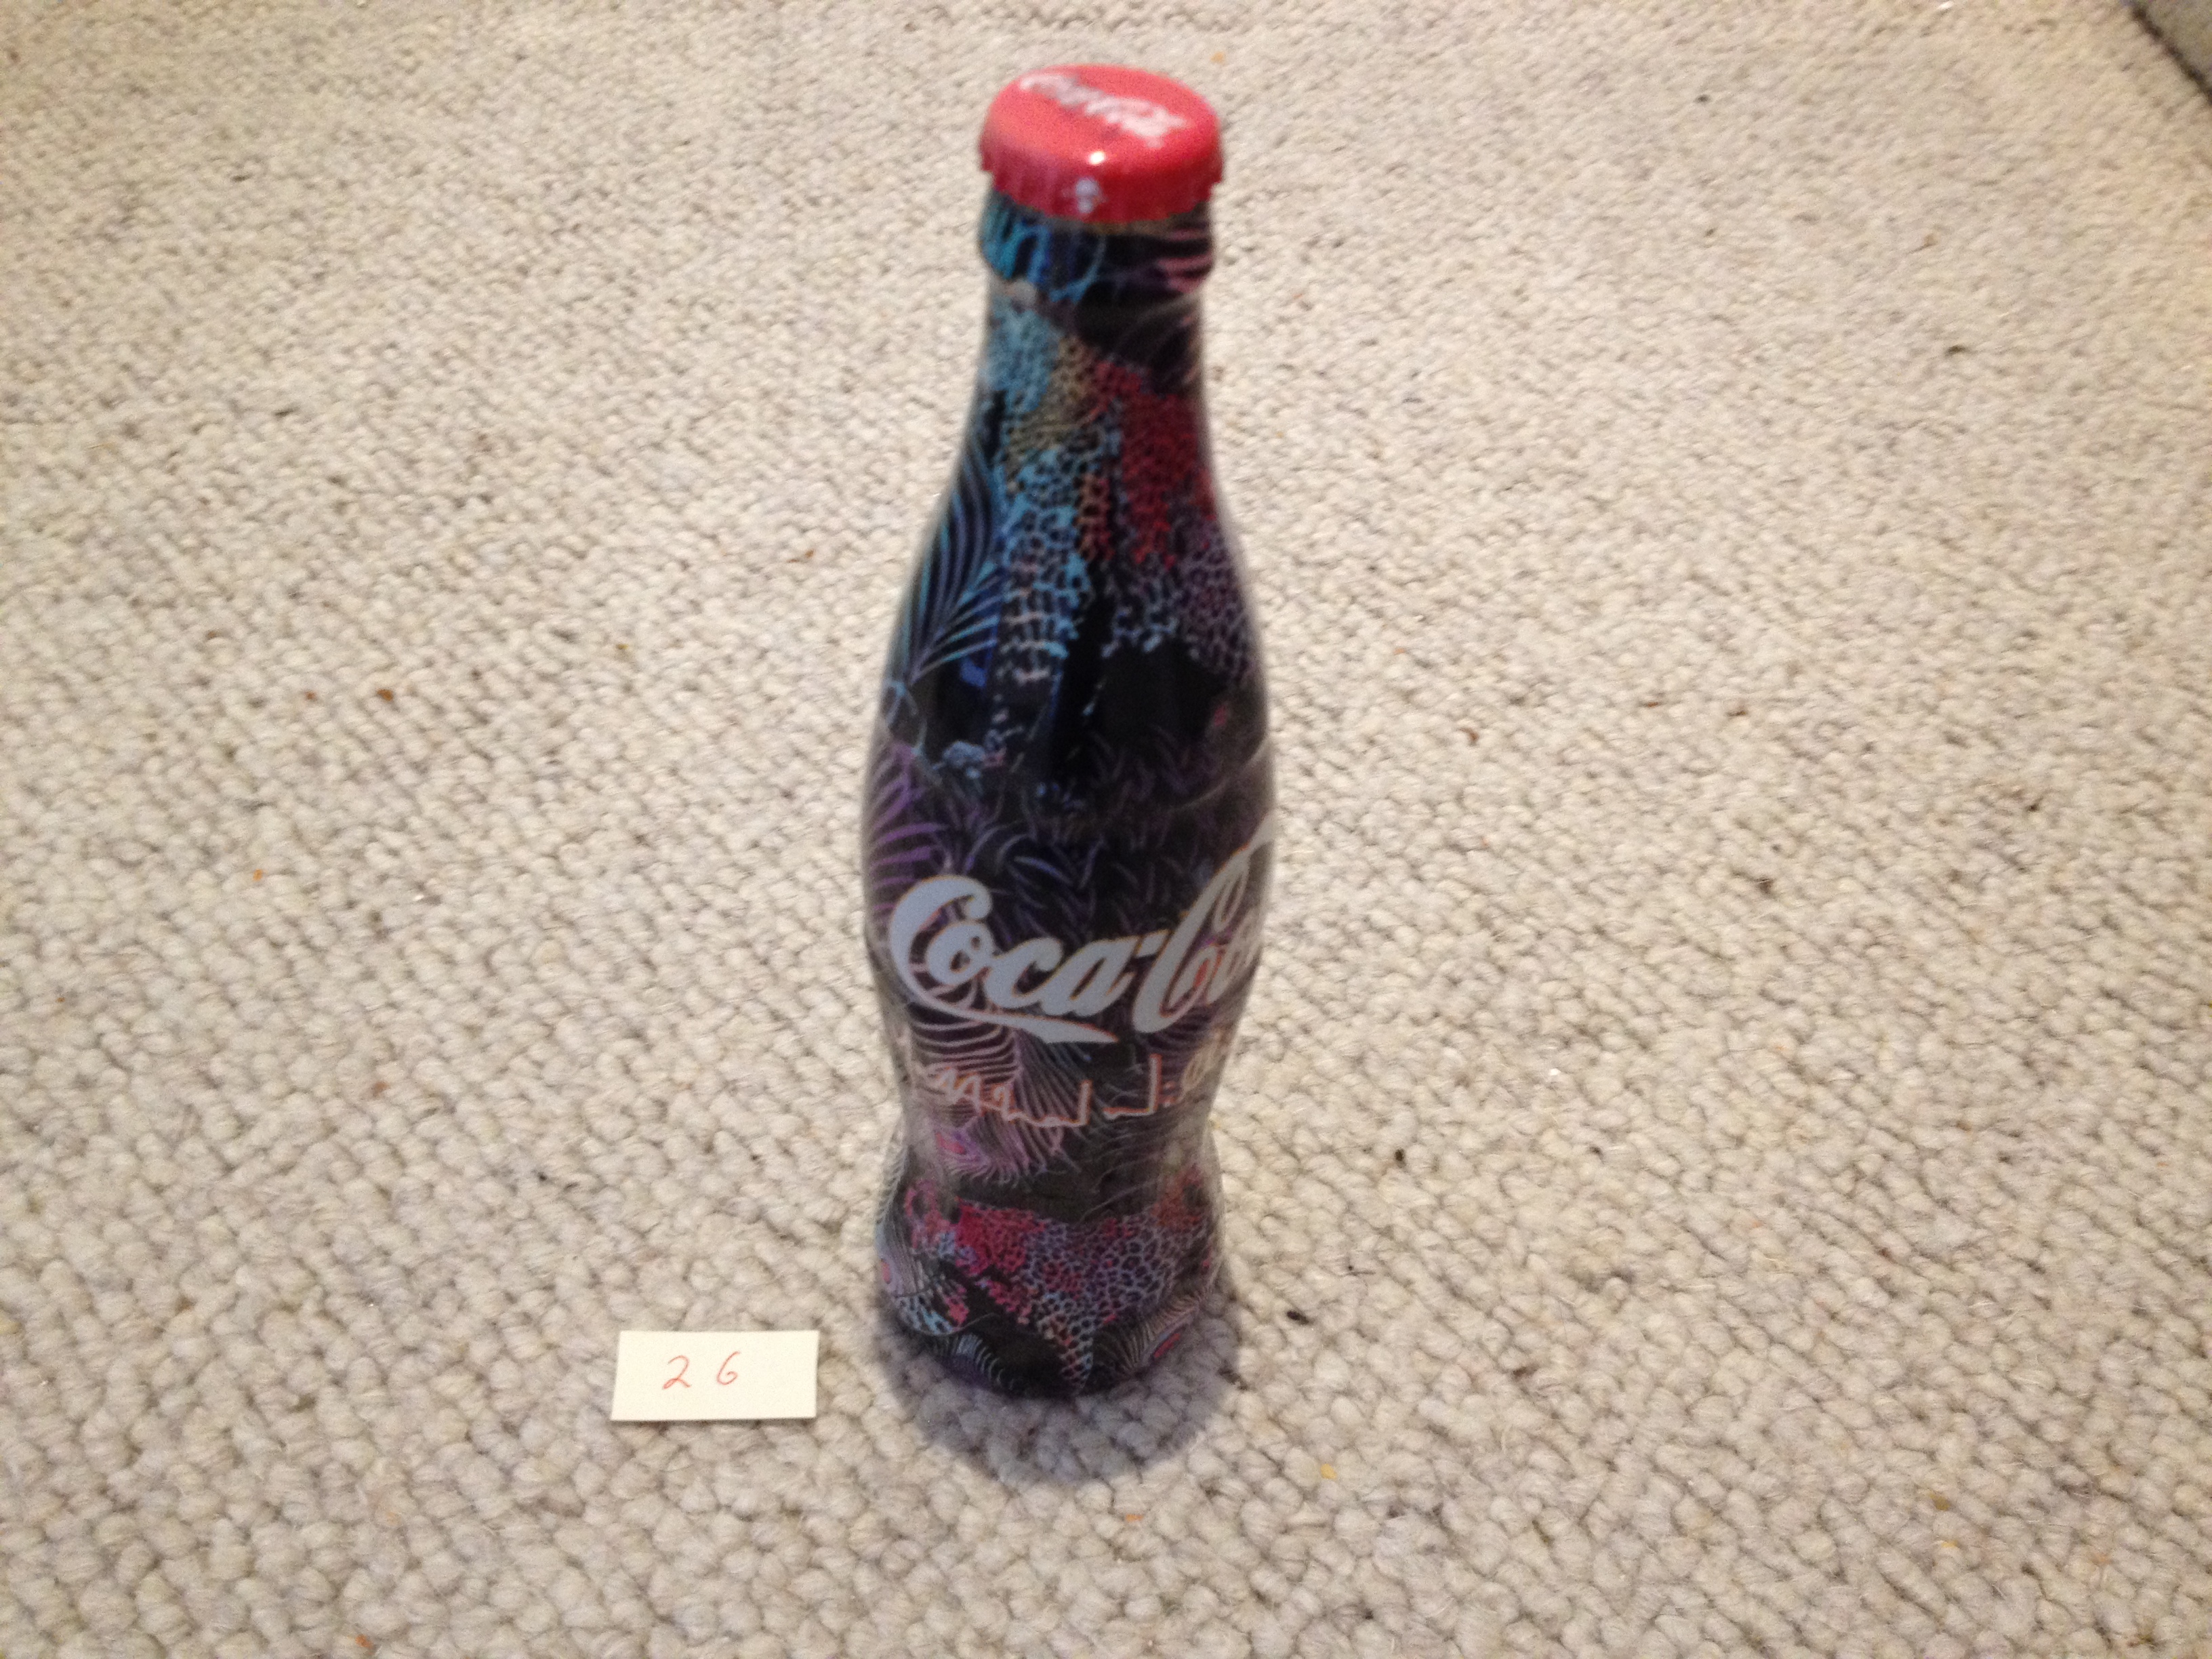 MATTHEW WILLIAMSON Coca Cola bottle (un-open) Unique Very Collectable